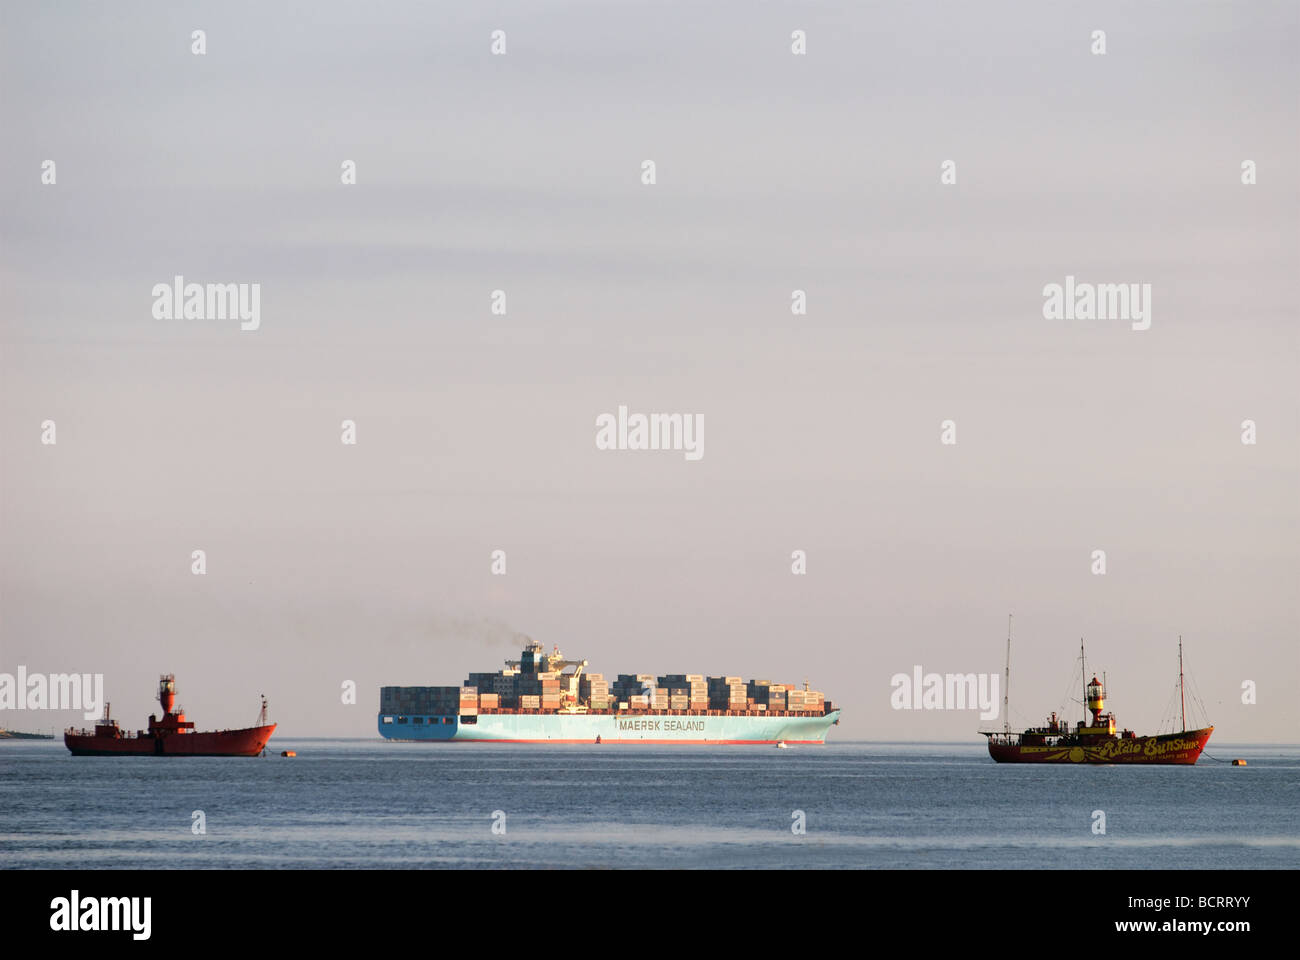 Porte-conteneurs Maersk Sealand, Felixstowe, Suffolk, UK. Banque D'Images